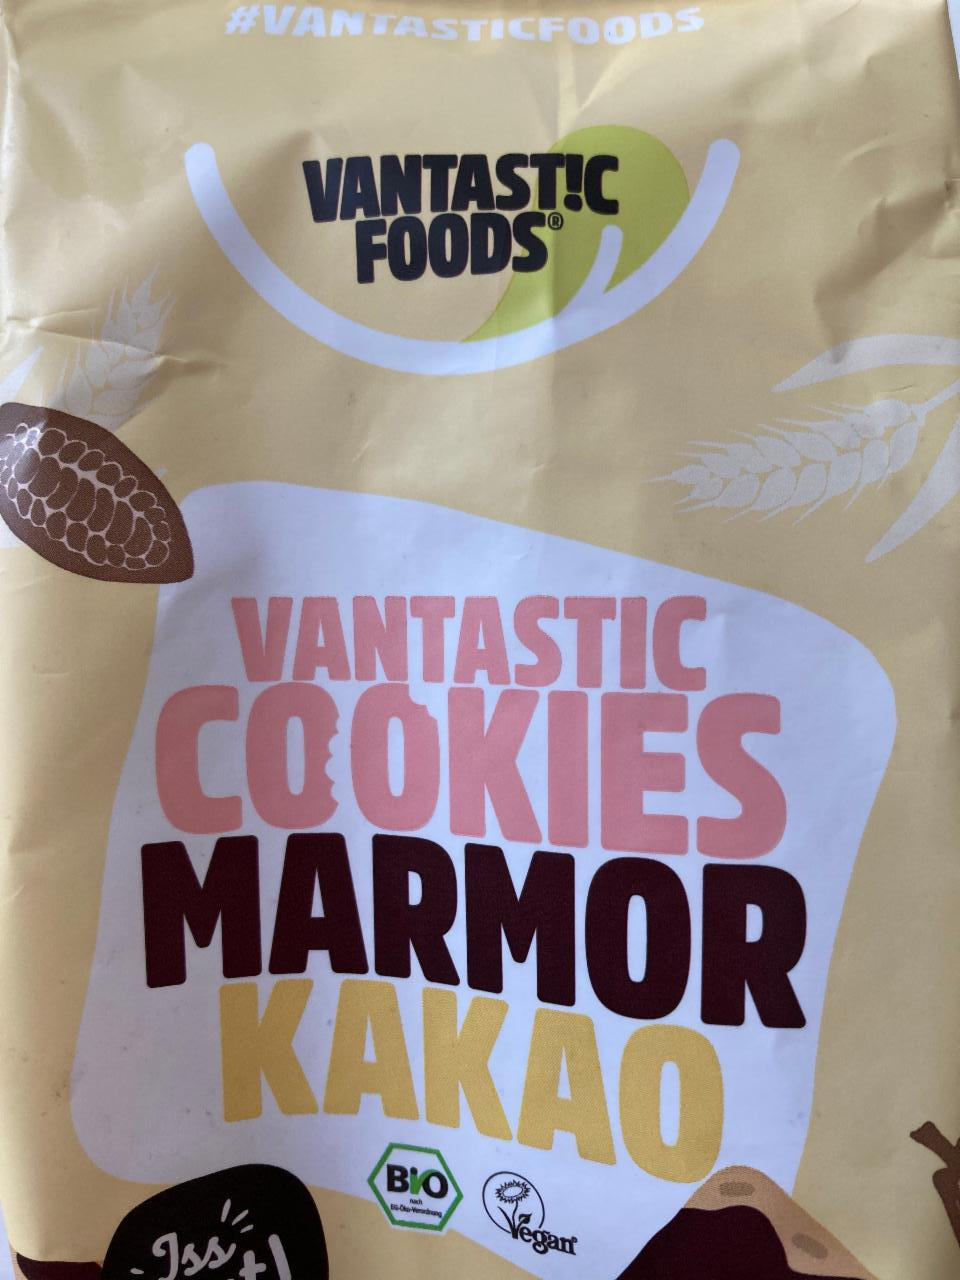 Fotografie - Vantastic Cookies marmor kakao Vantastic foods